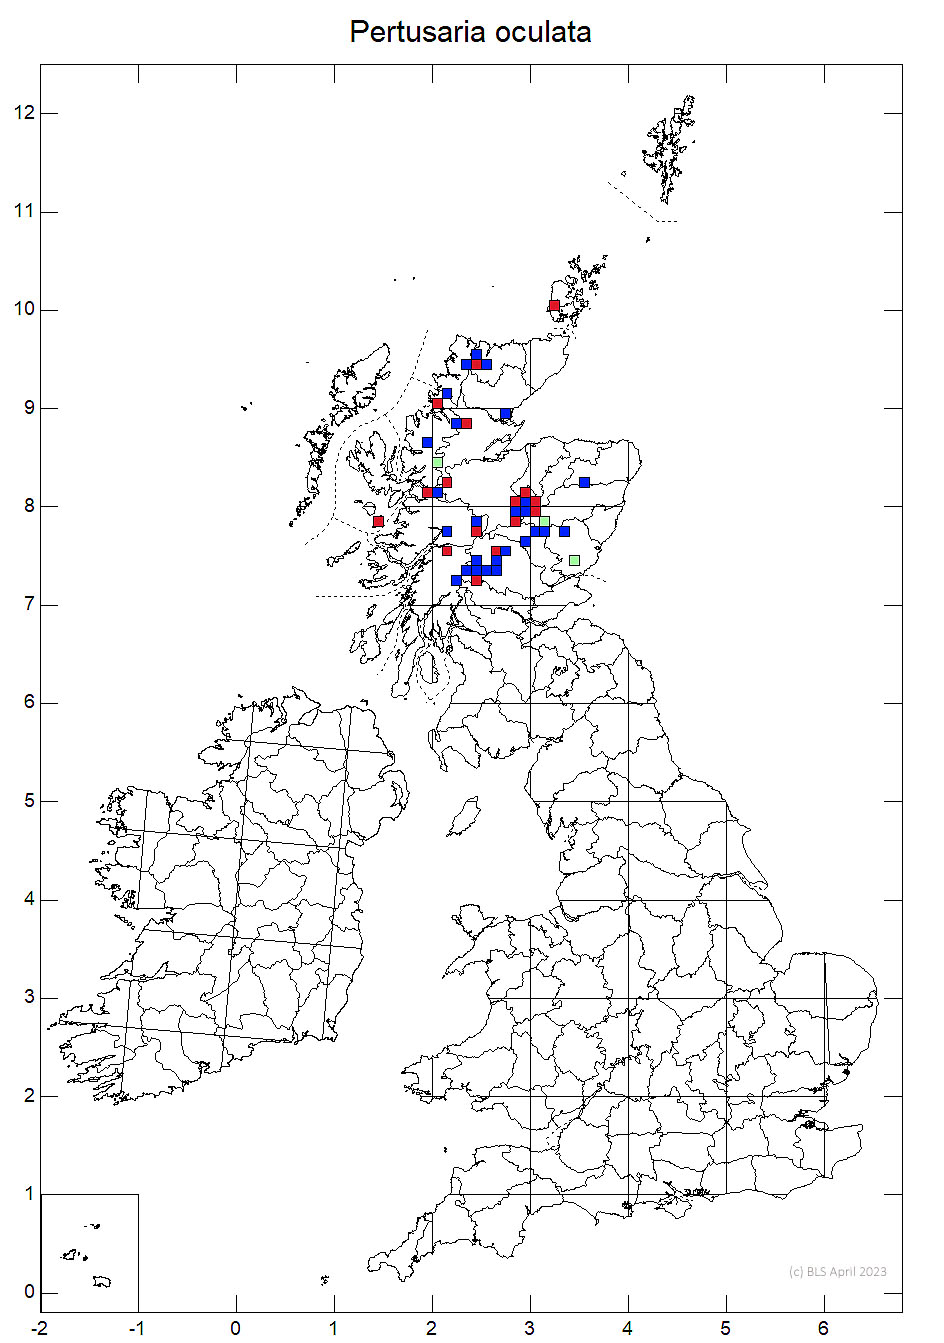 Pertusaria oculata 10km sq distribution map